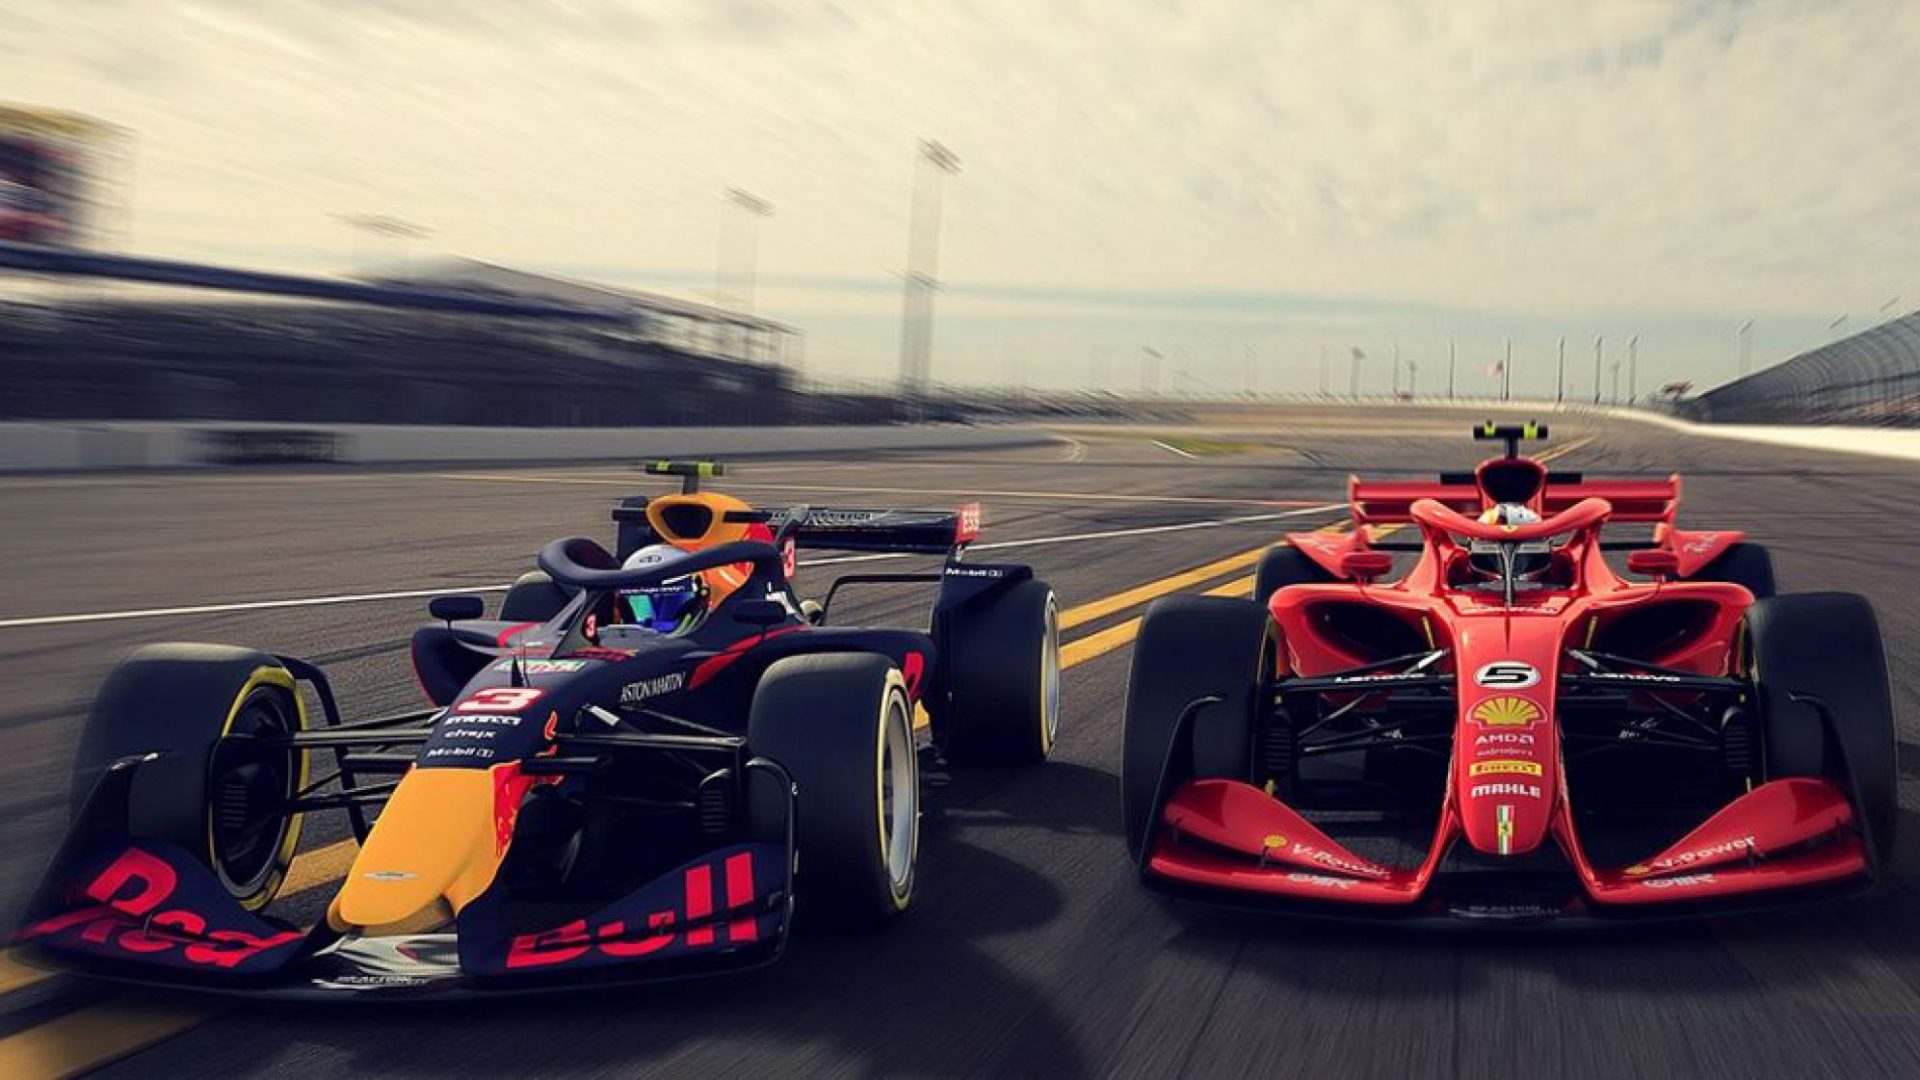 F1 2021 official concept images - Team VVV